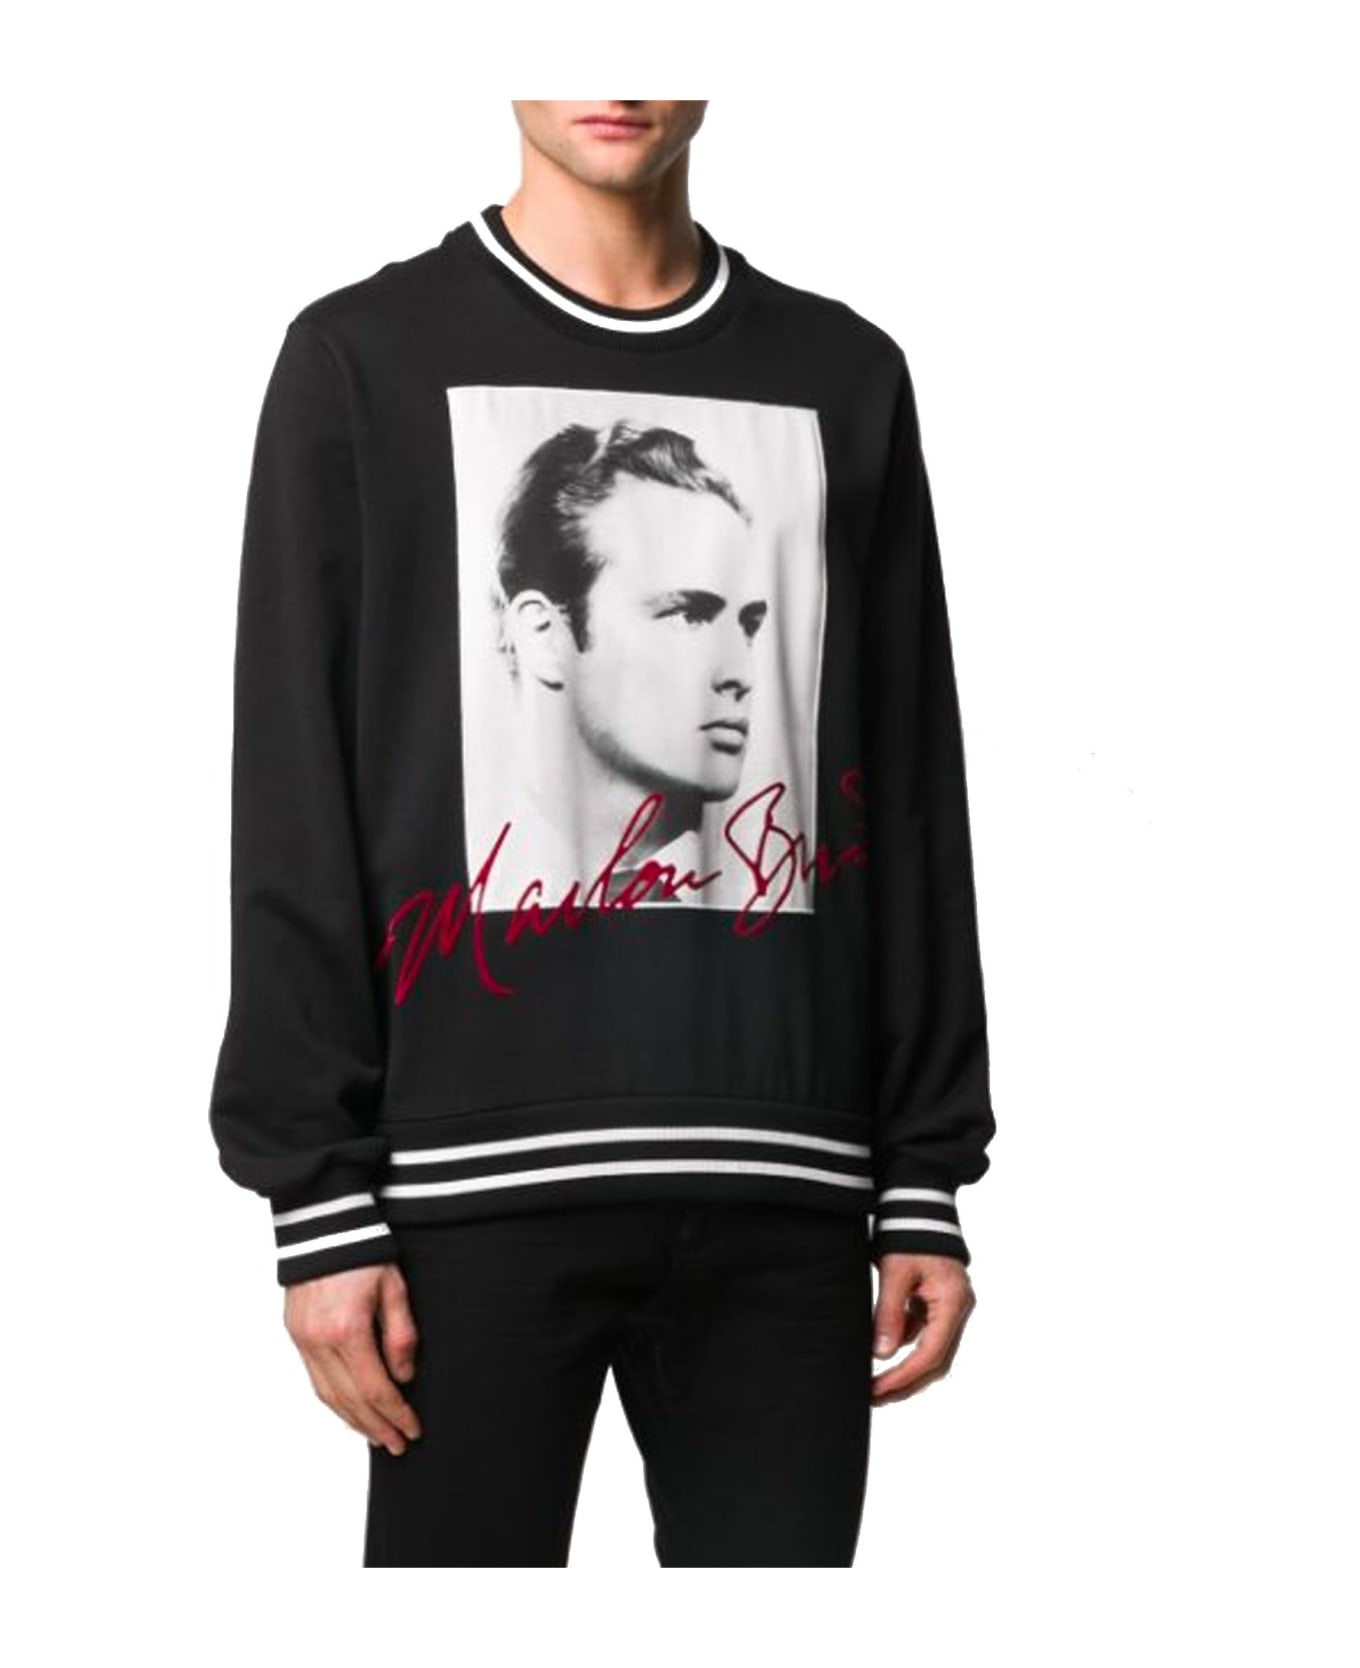 Dolce & Gabbana Marlon Brando Sweatshirt - Black